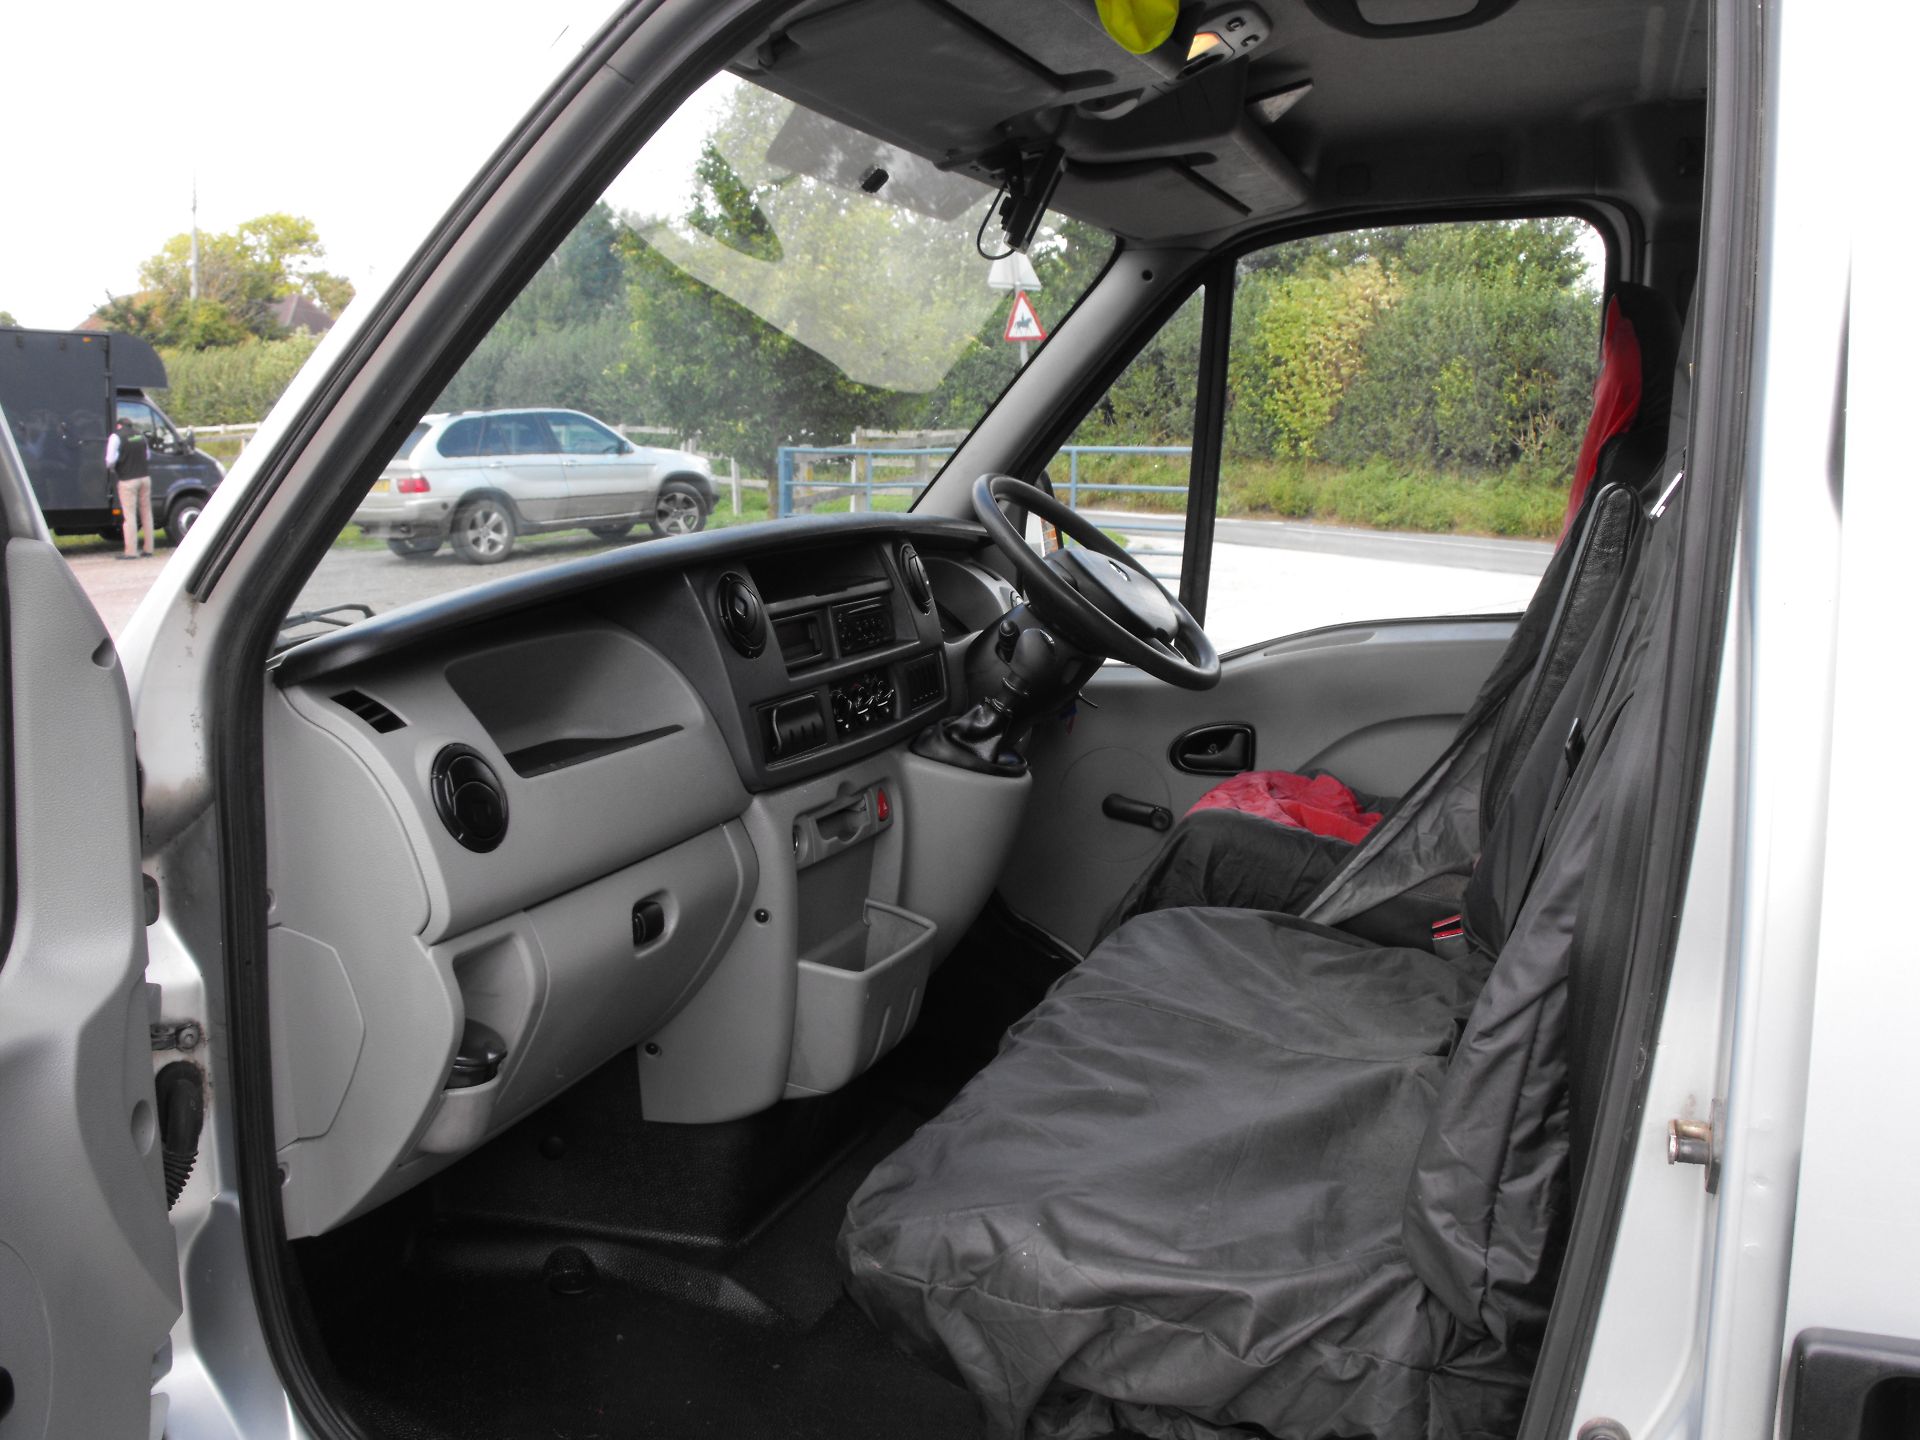 2009 Renault Master Double cab van 6 seats - Image 4 of 10